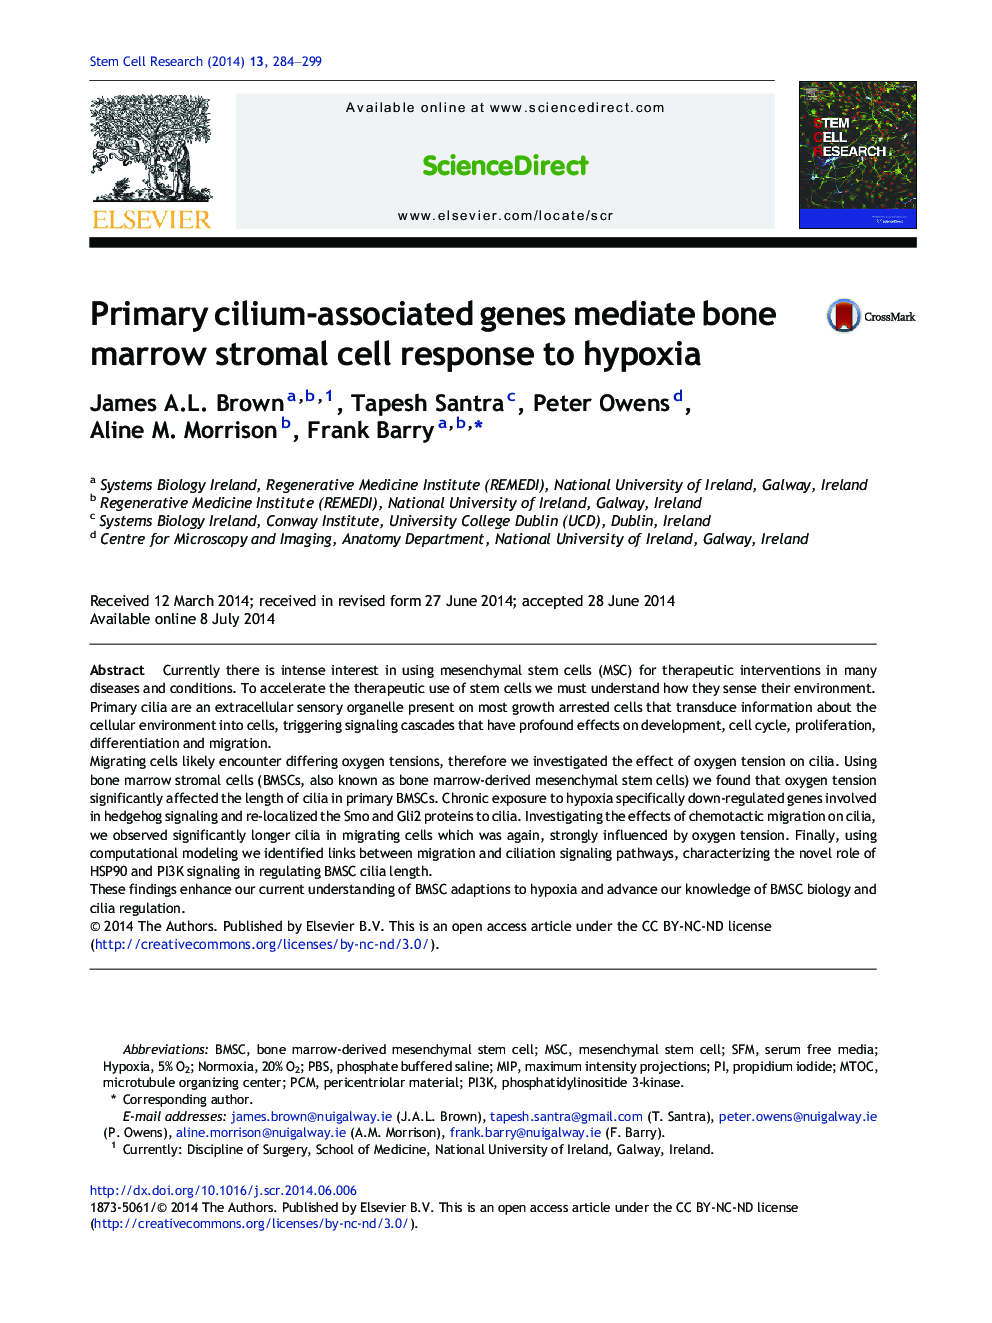 Primary cilium-associated genes mediate bone marrow stromal cell response to hypoxia